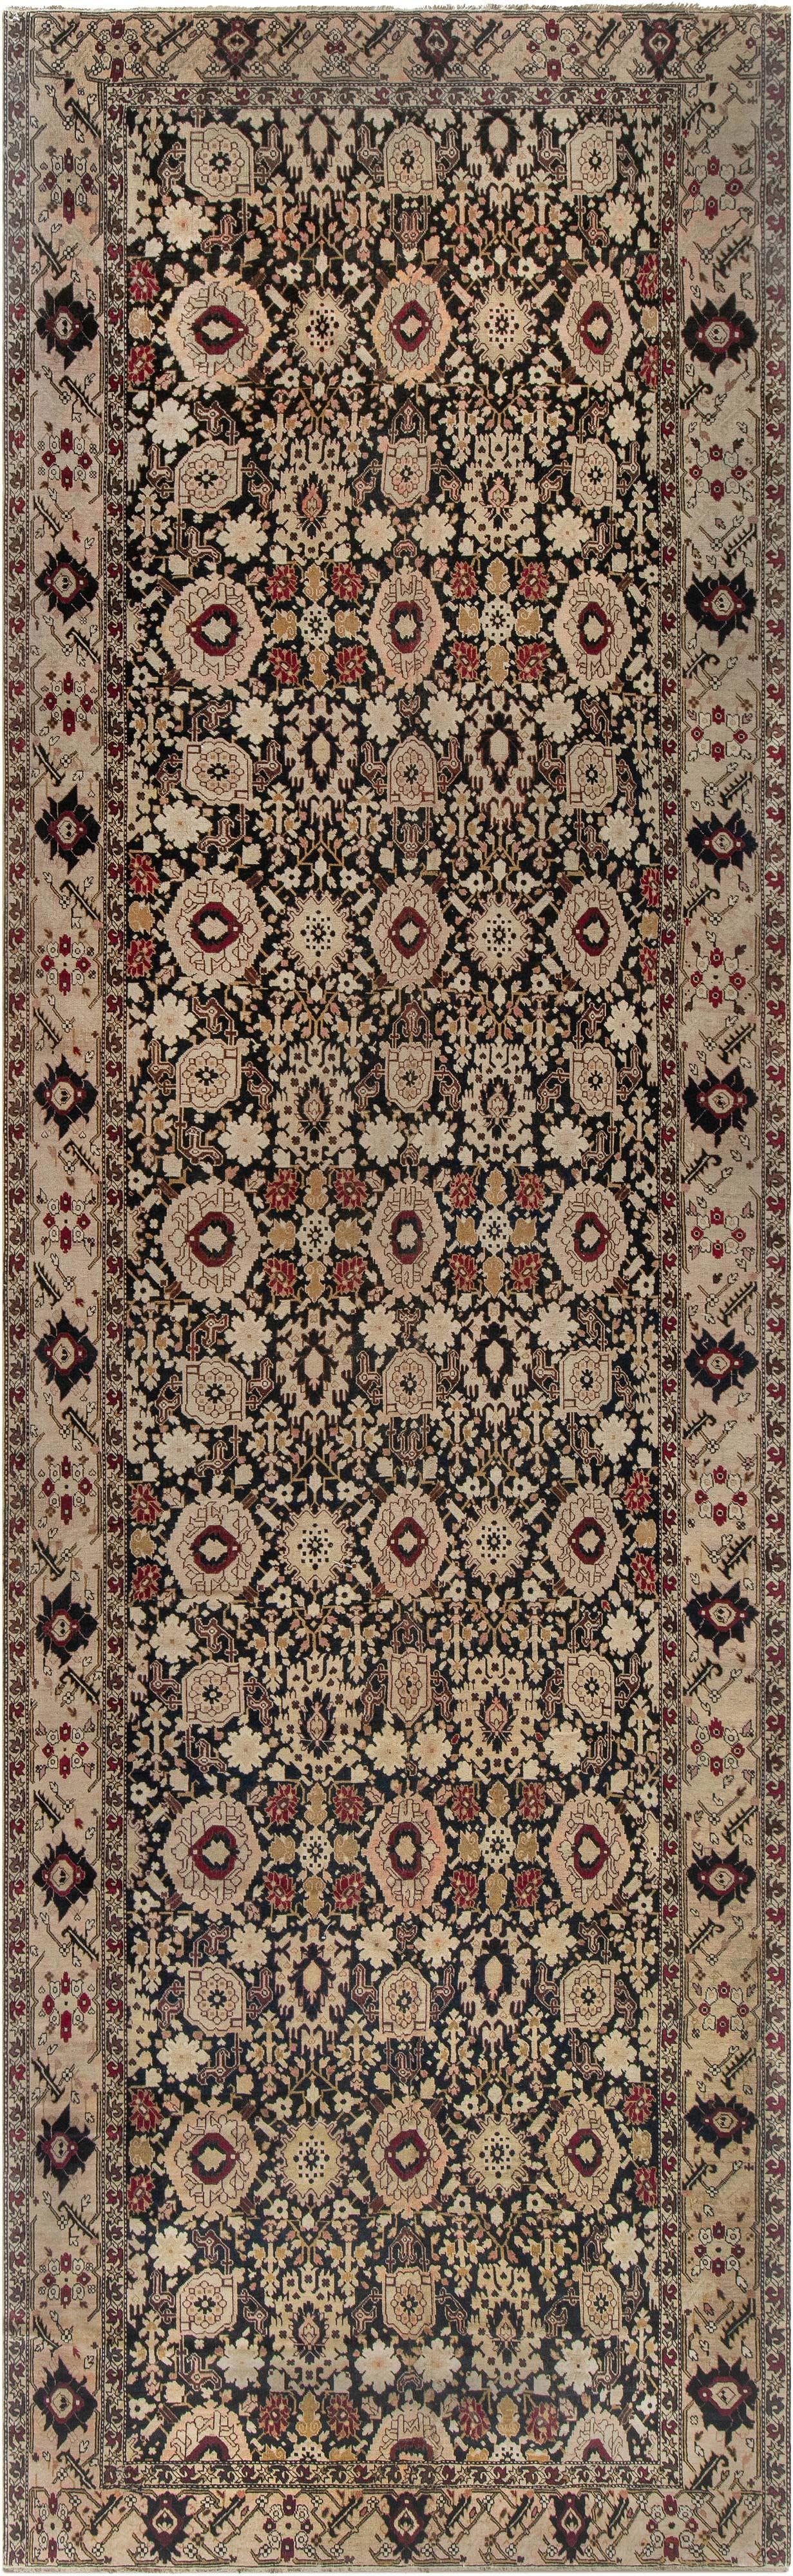 19th Century Karabagh Botanic Handmade Wool Carpet